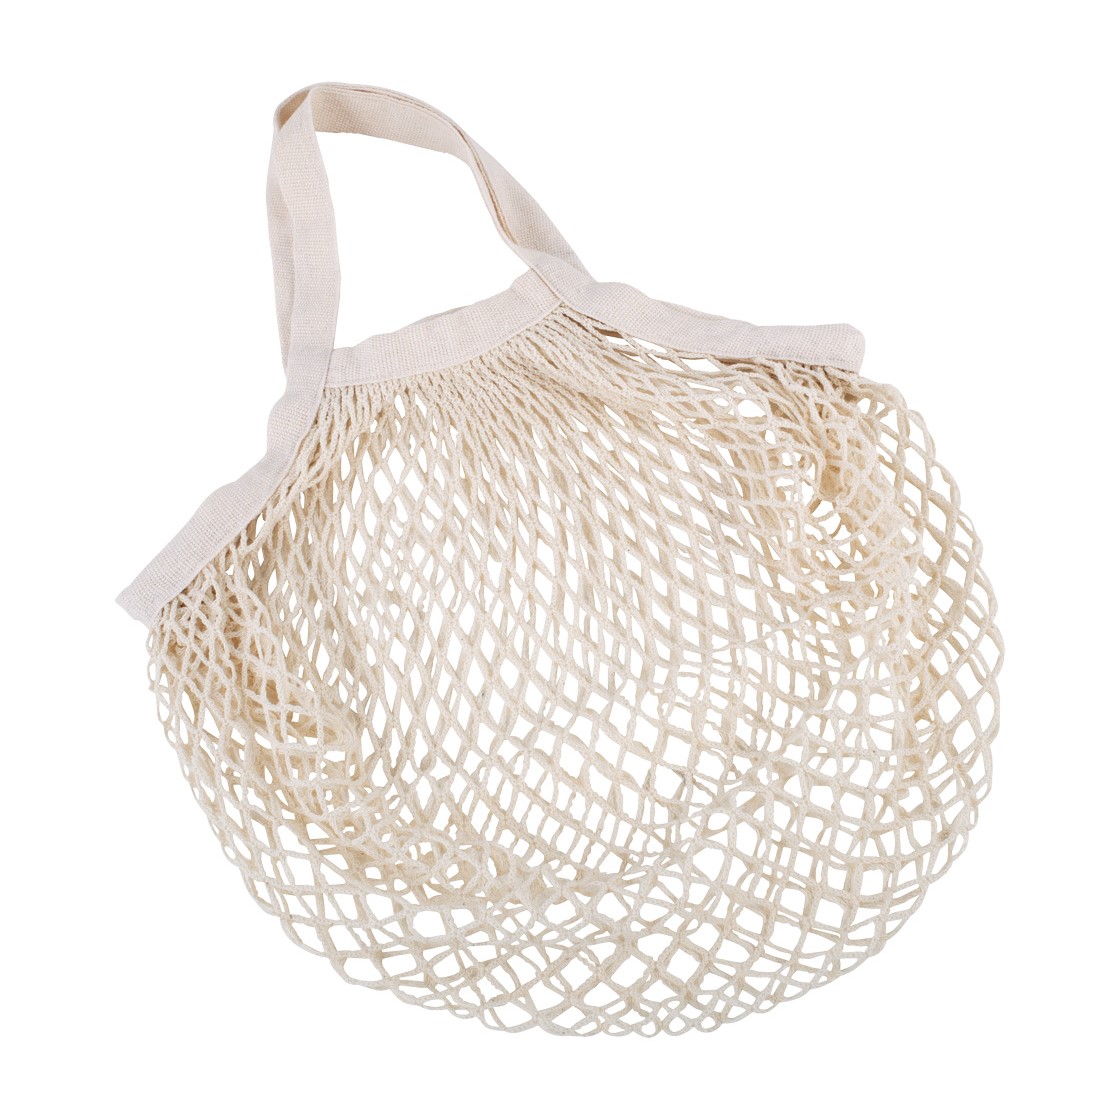 Redecker Shopping Cotton Net Bag